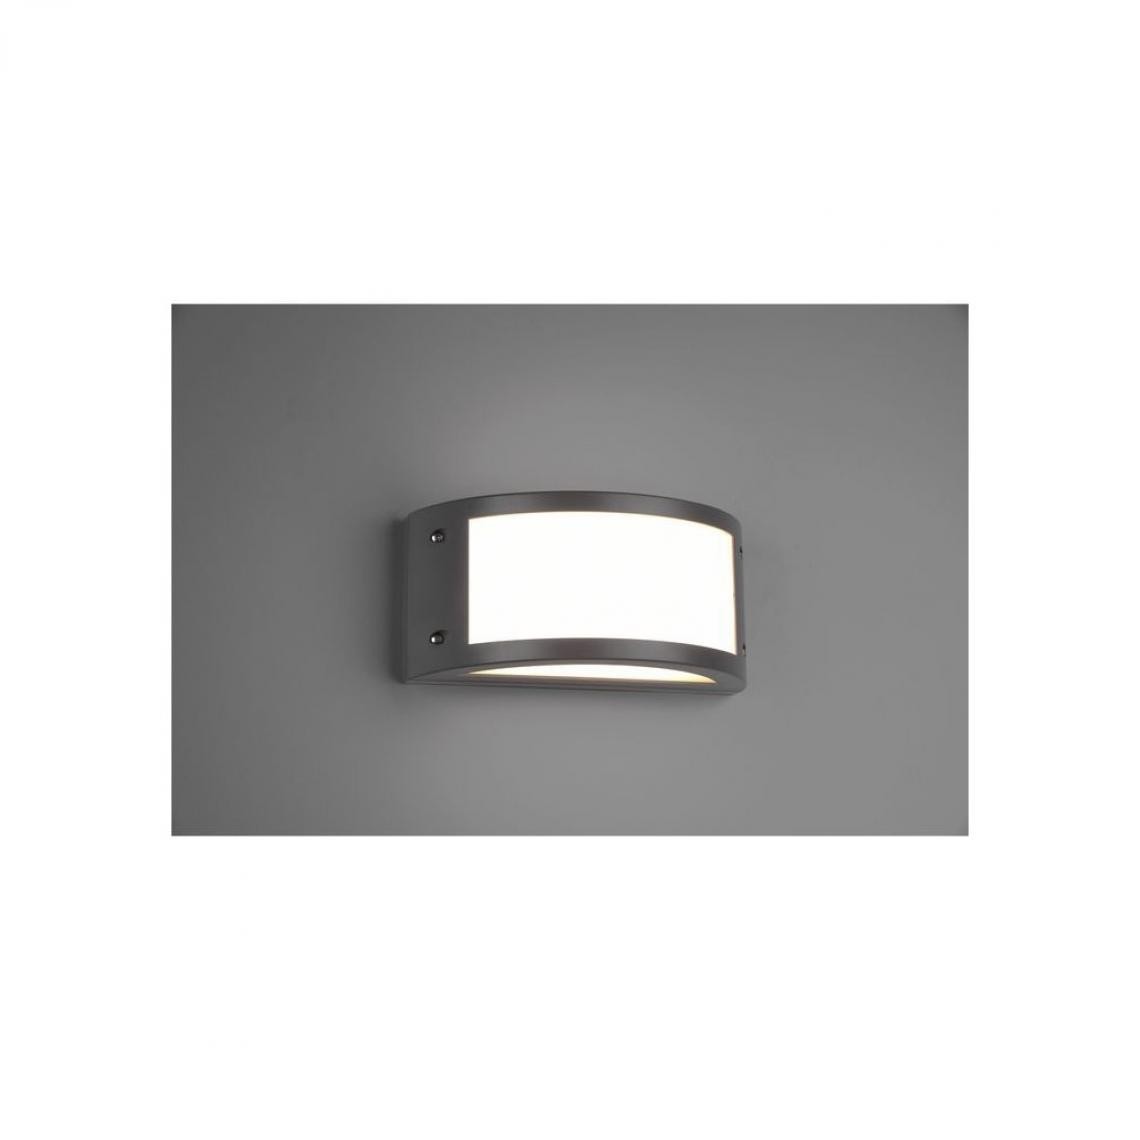 REALITY - Applique Kendal Anthracite 1x12W SMD LED - Applique, hublot